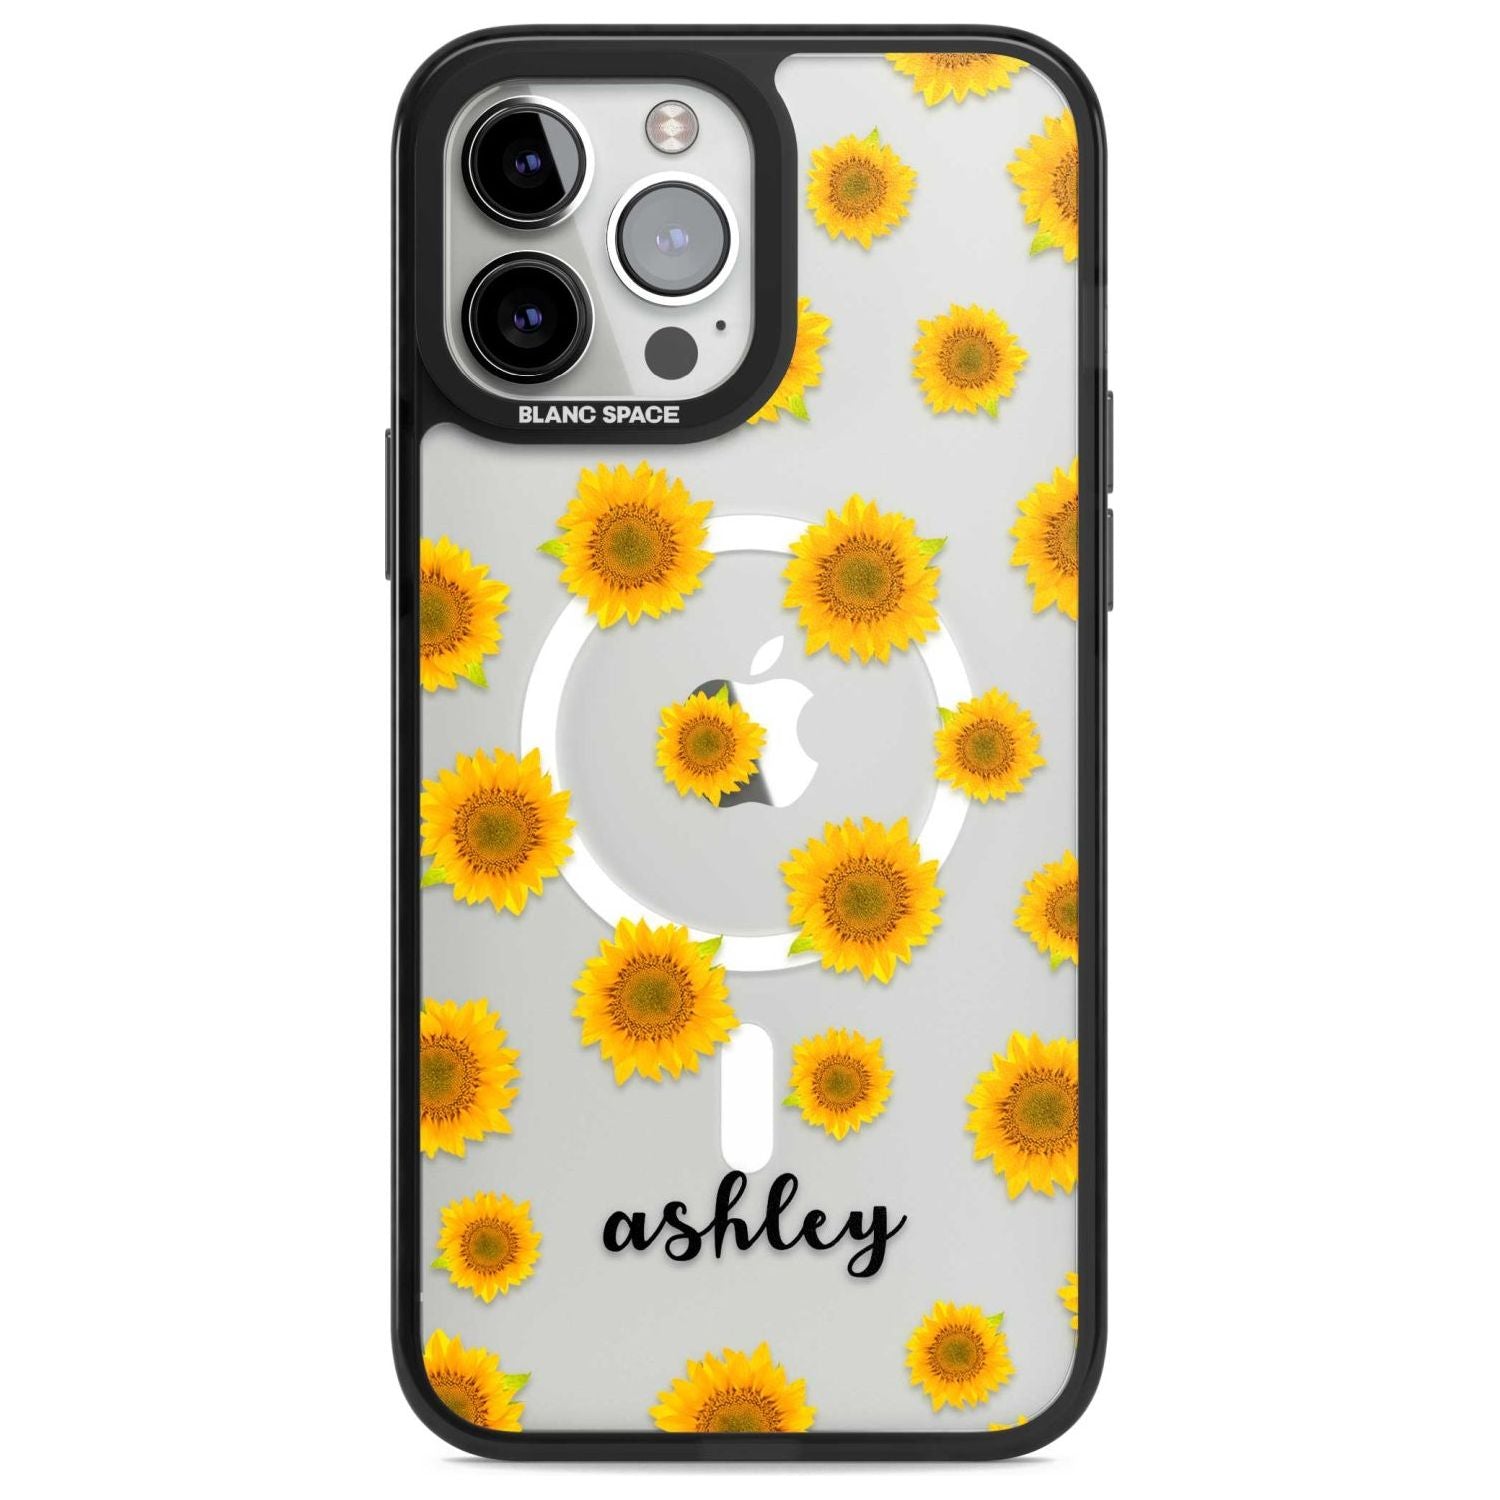 Personalised Sunflowers & Cursive Custom Phone Case iPhone 13 Pro Max / Magsafe Black Impact Case Blanc Space